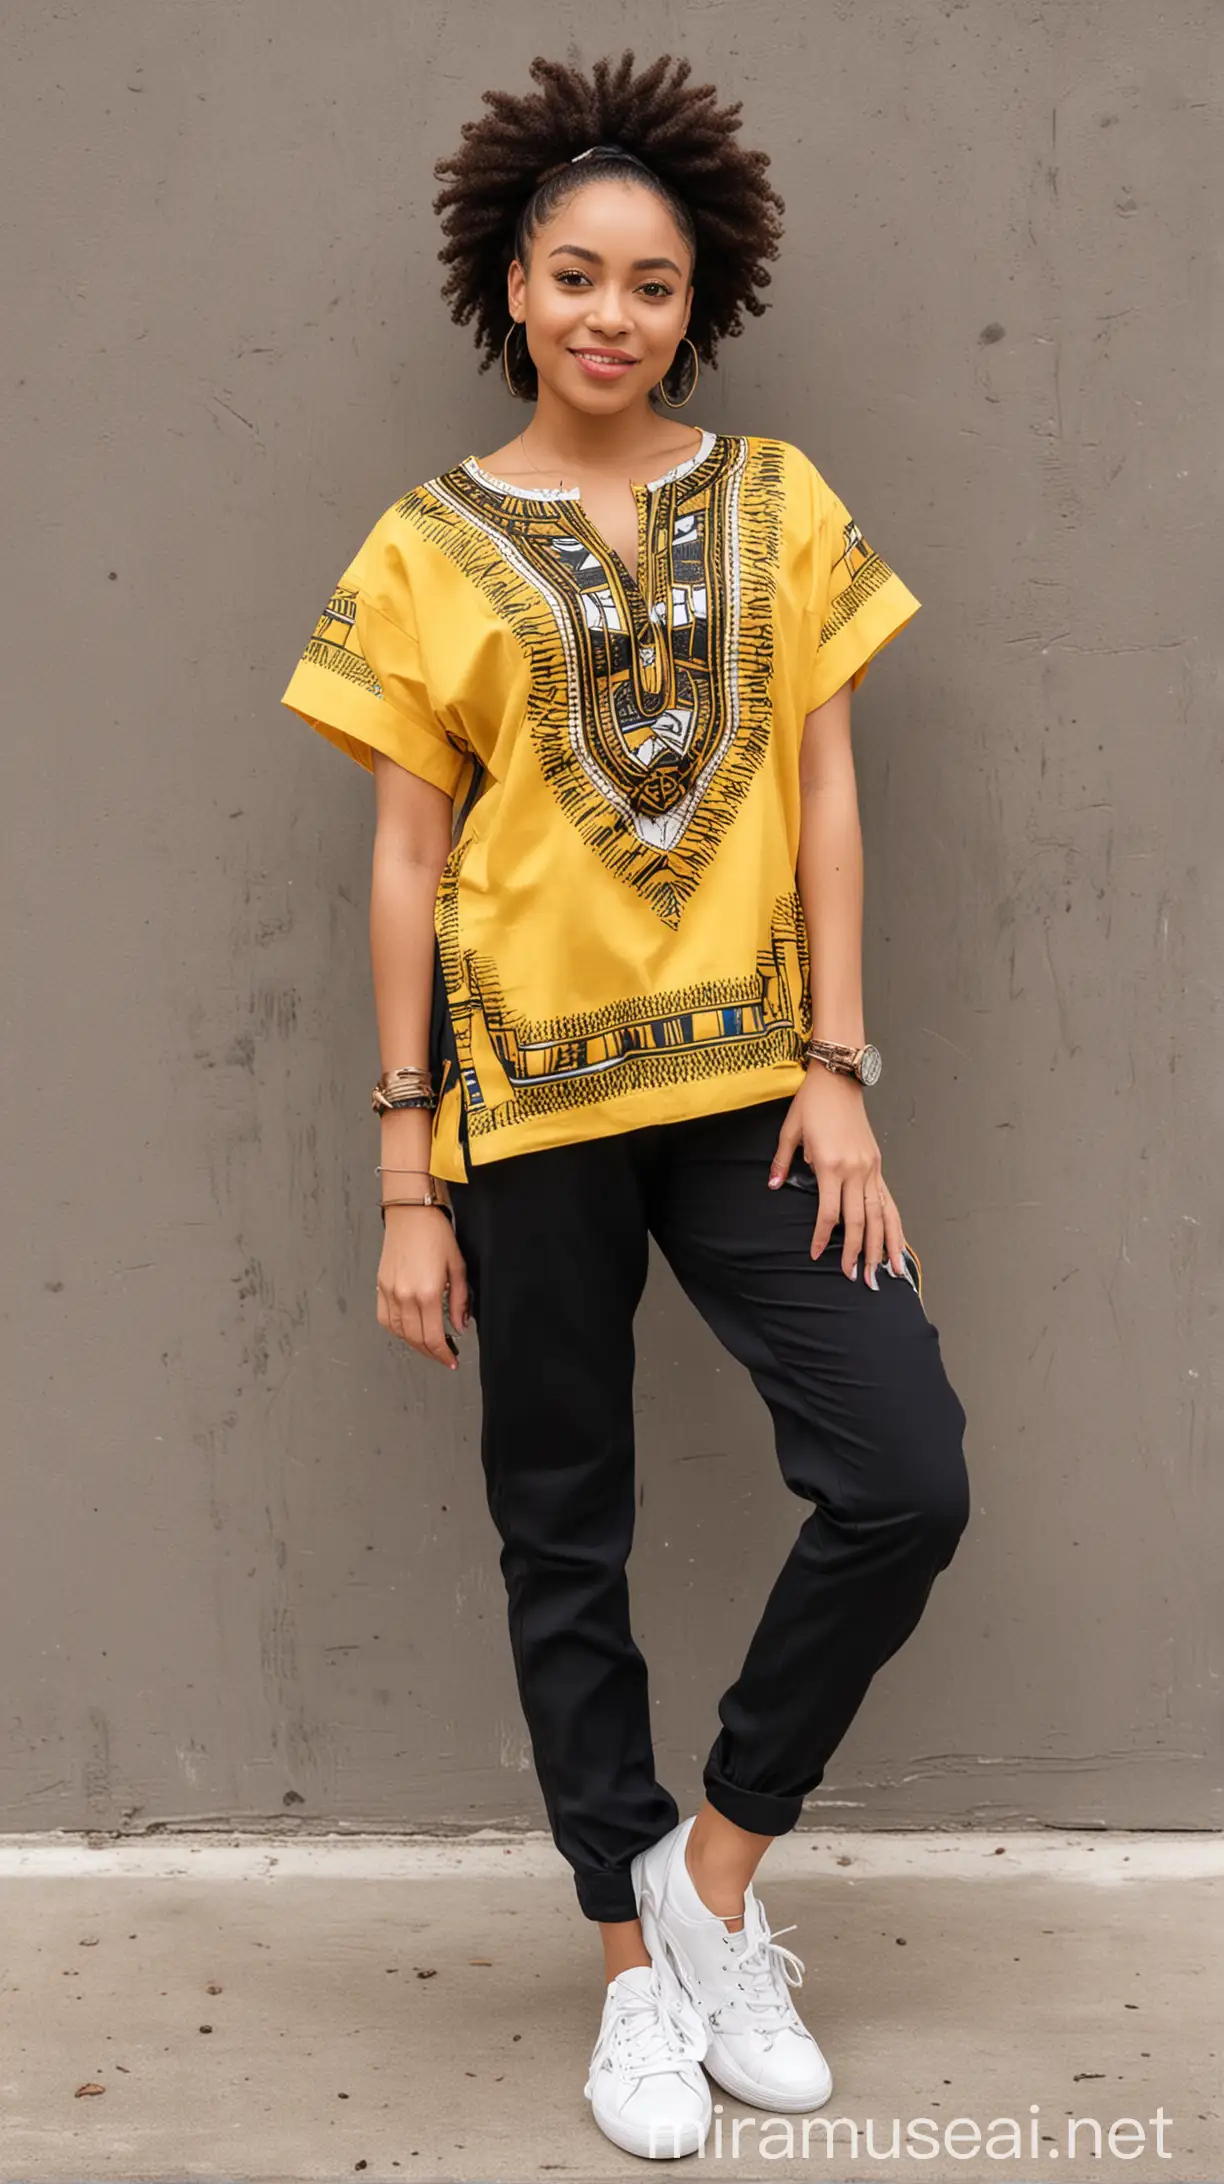 African Woman in Yellow Dashiki Shirt and Black Pants